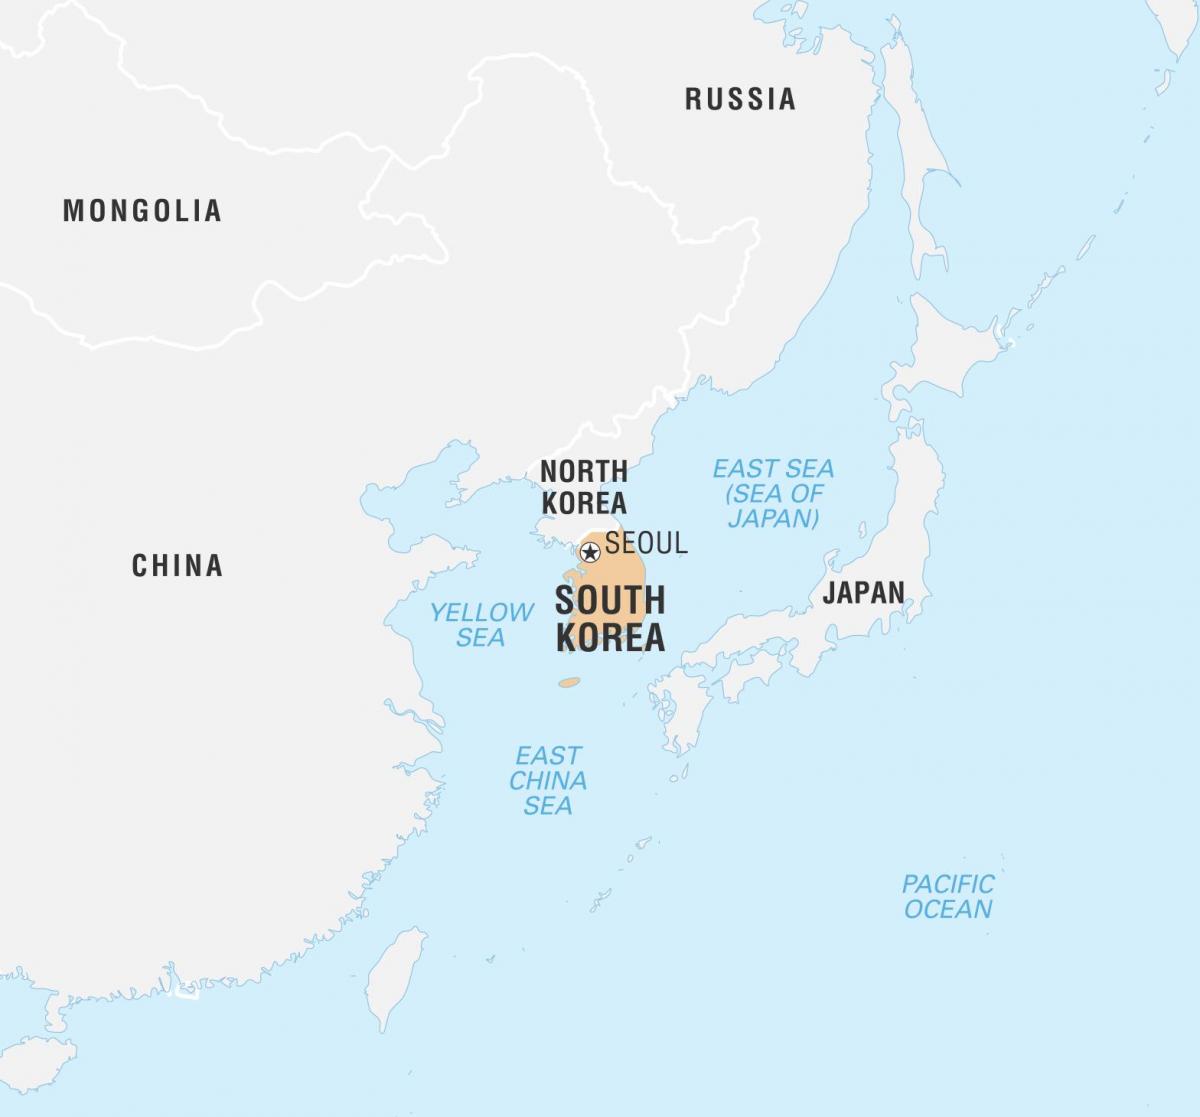 Mapa da Coreia do Sul (ROK) e dos países limítrofes